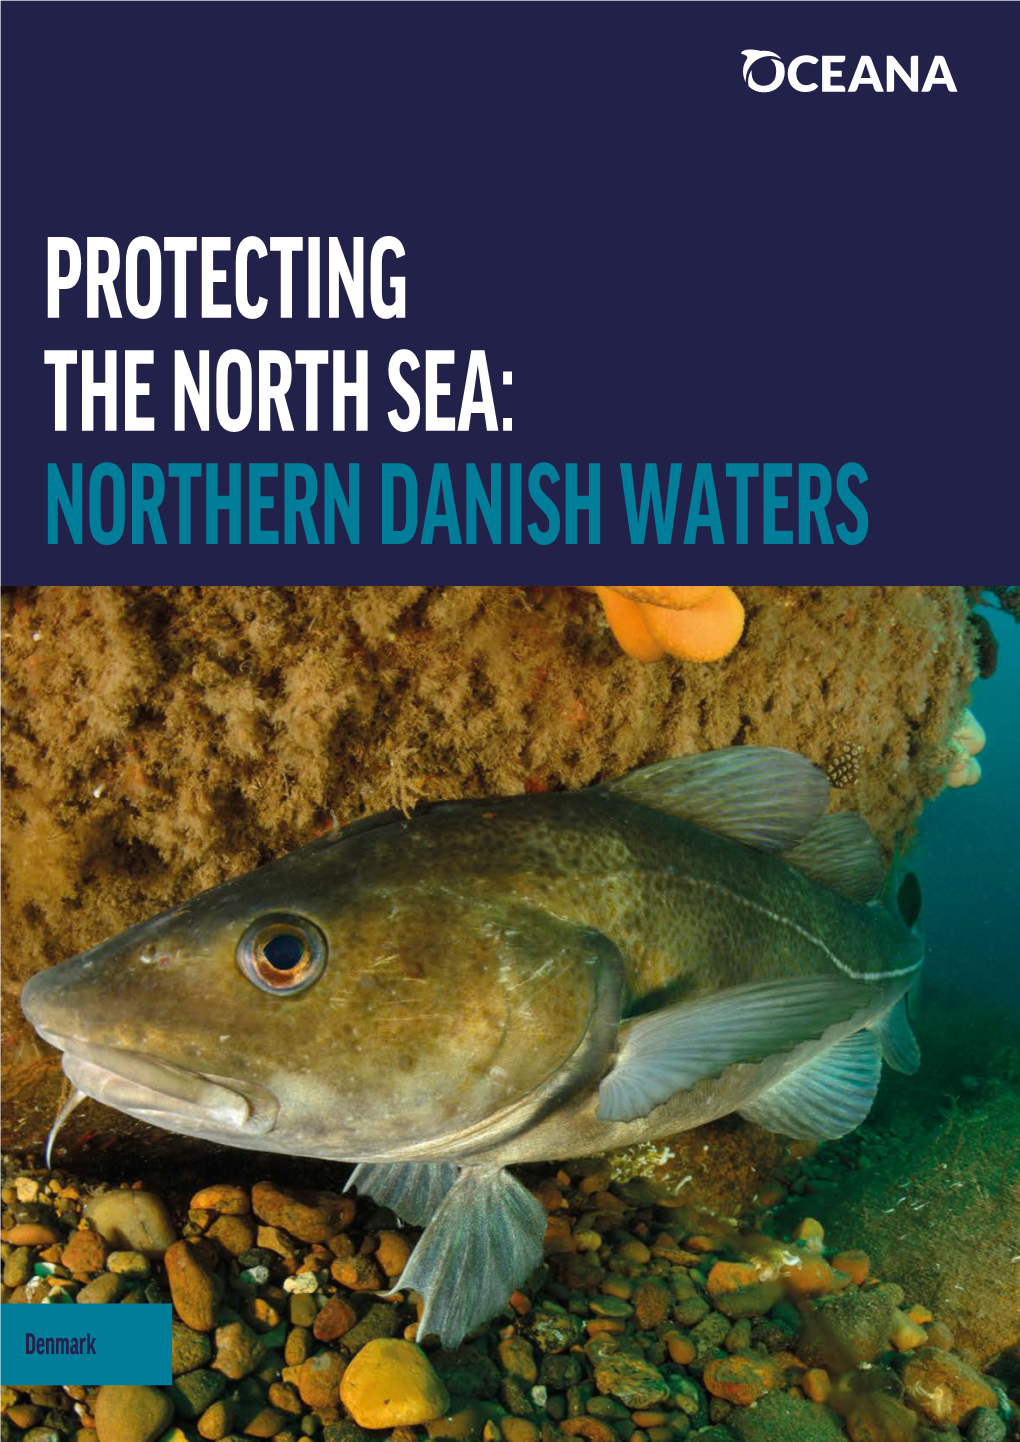 PROTECTING the NORTH SEA: NORTHERN DANISH WATERS PROTECTING the NORTH SEA: NORTHERN DANISH WATERS European Headquarters - Madrid E-Mail: Europe@Oceana.Org